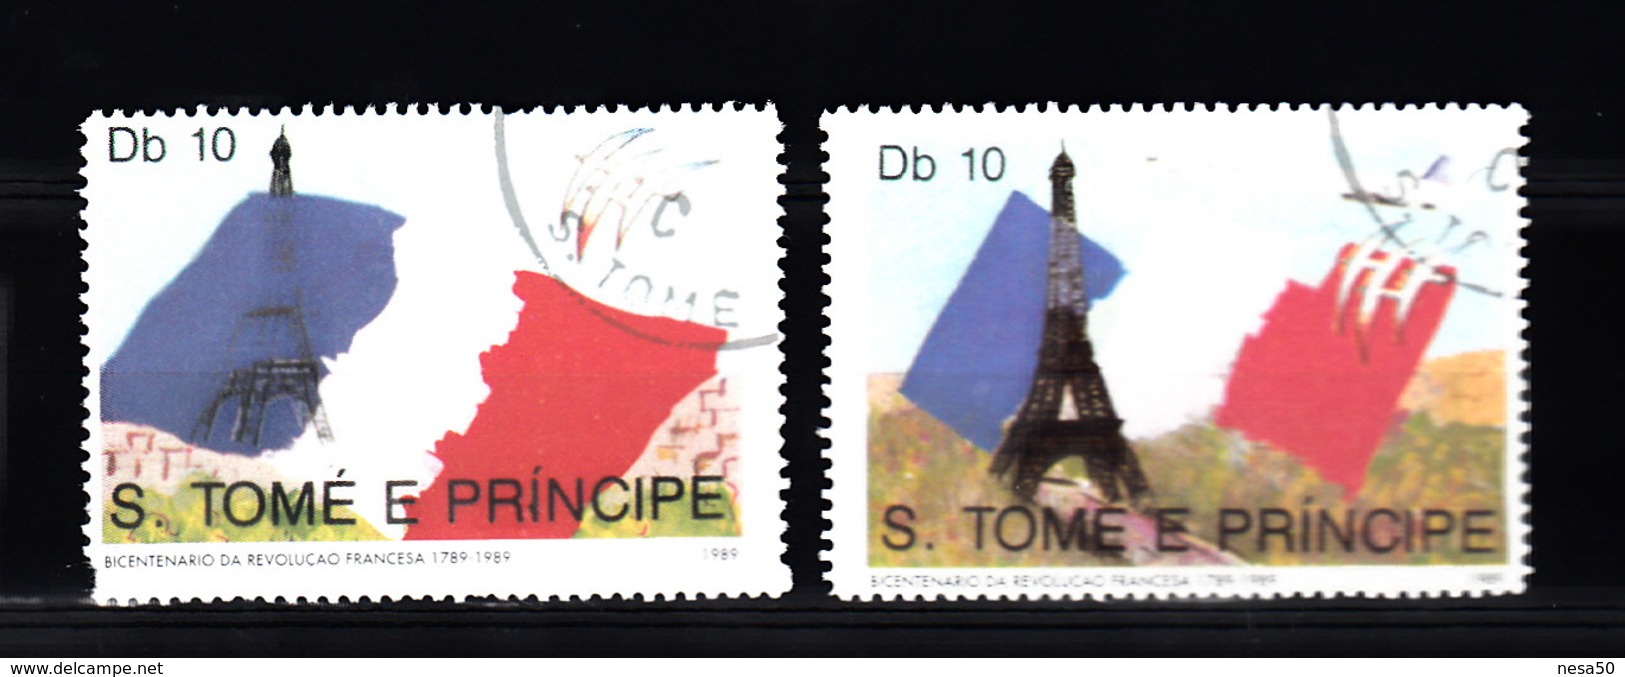 Sao Tome En Principe 1989 Mi Nr 1106 + 1107: Franse Vlag + Eifeltoren + Concorde - Sao Tome En Principe